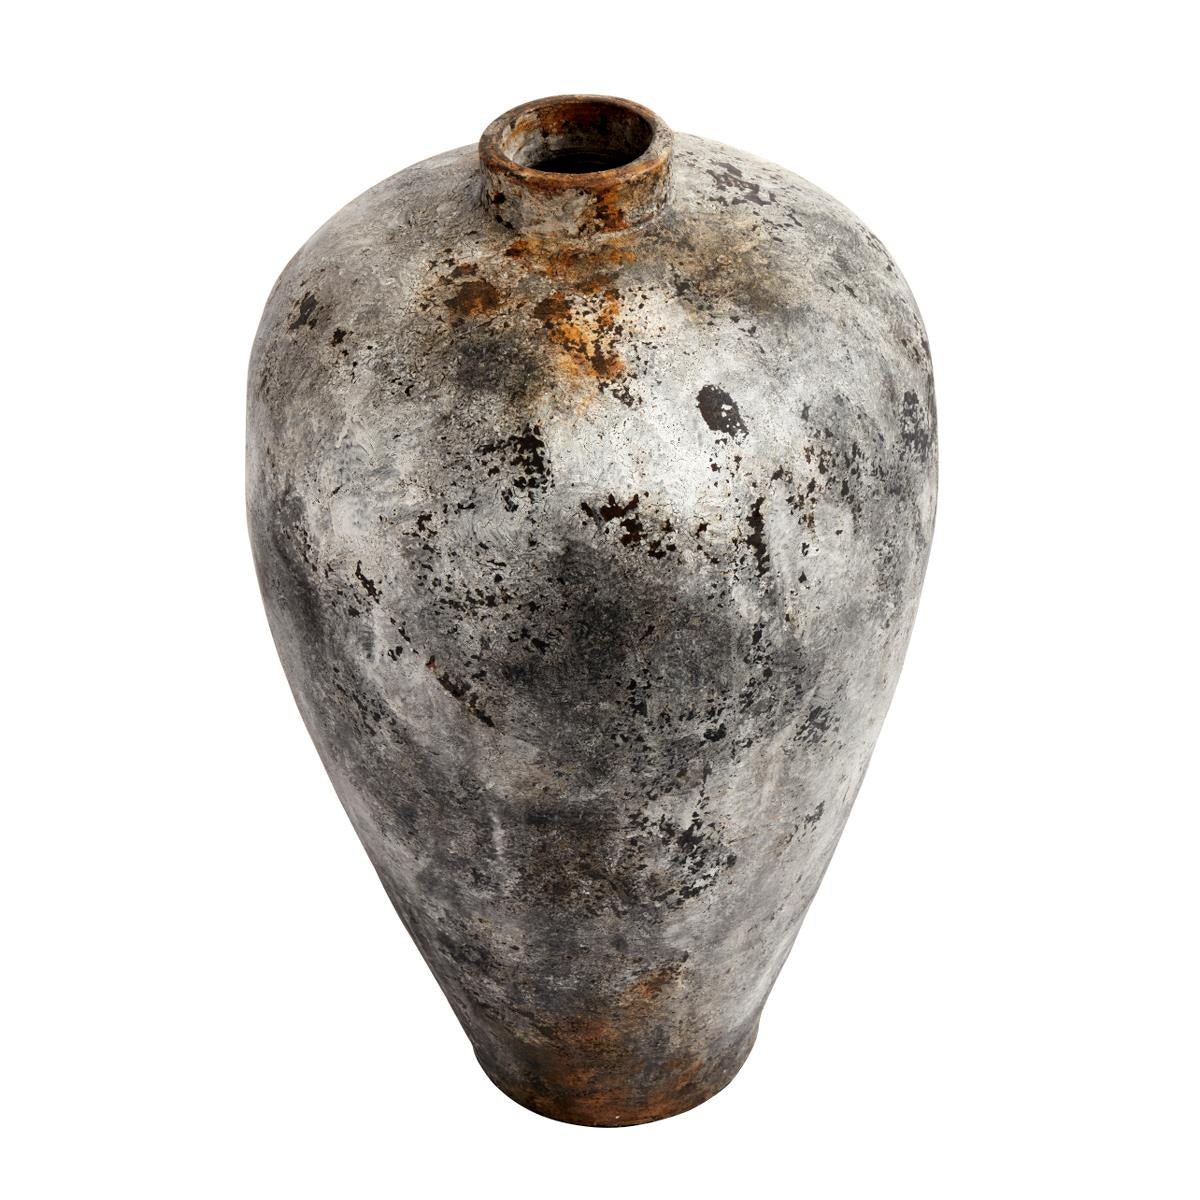 Terracotta Vase Echo grau/schwarz/rost 80cm